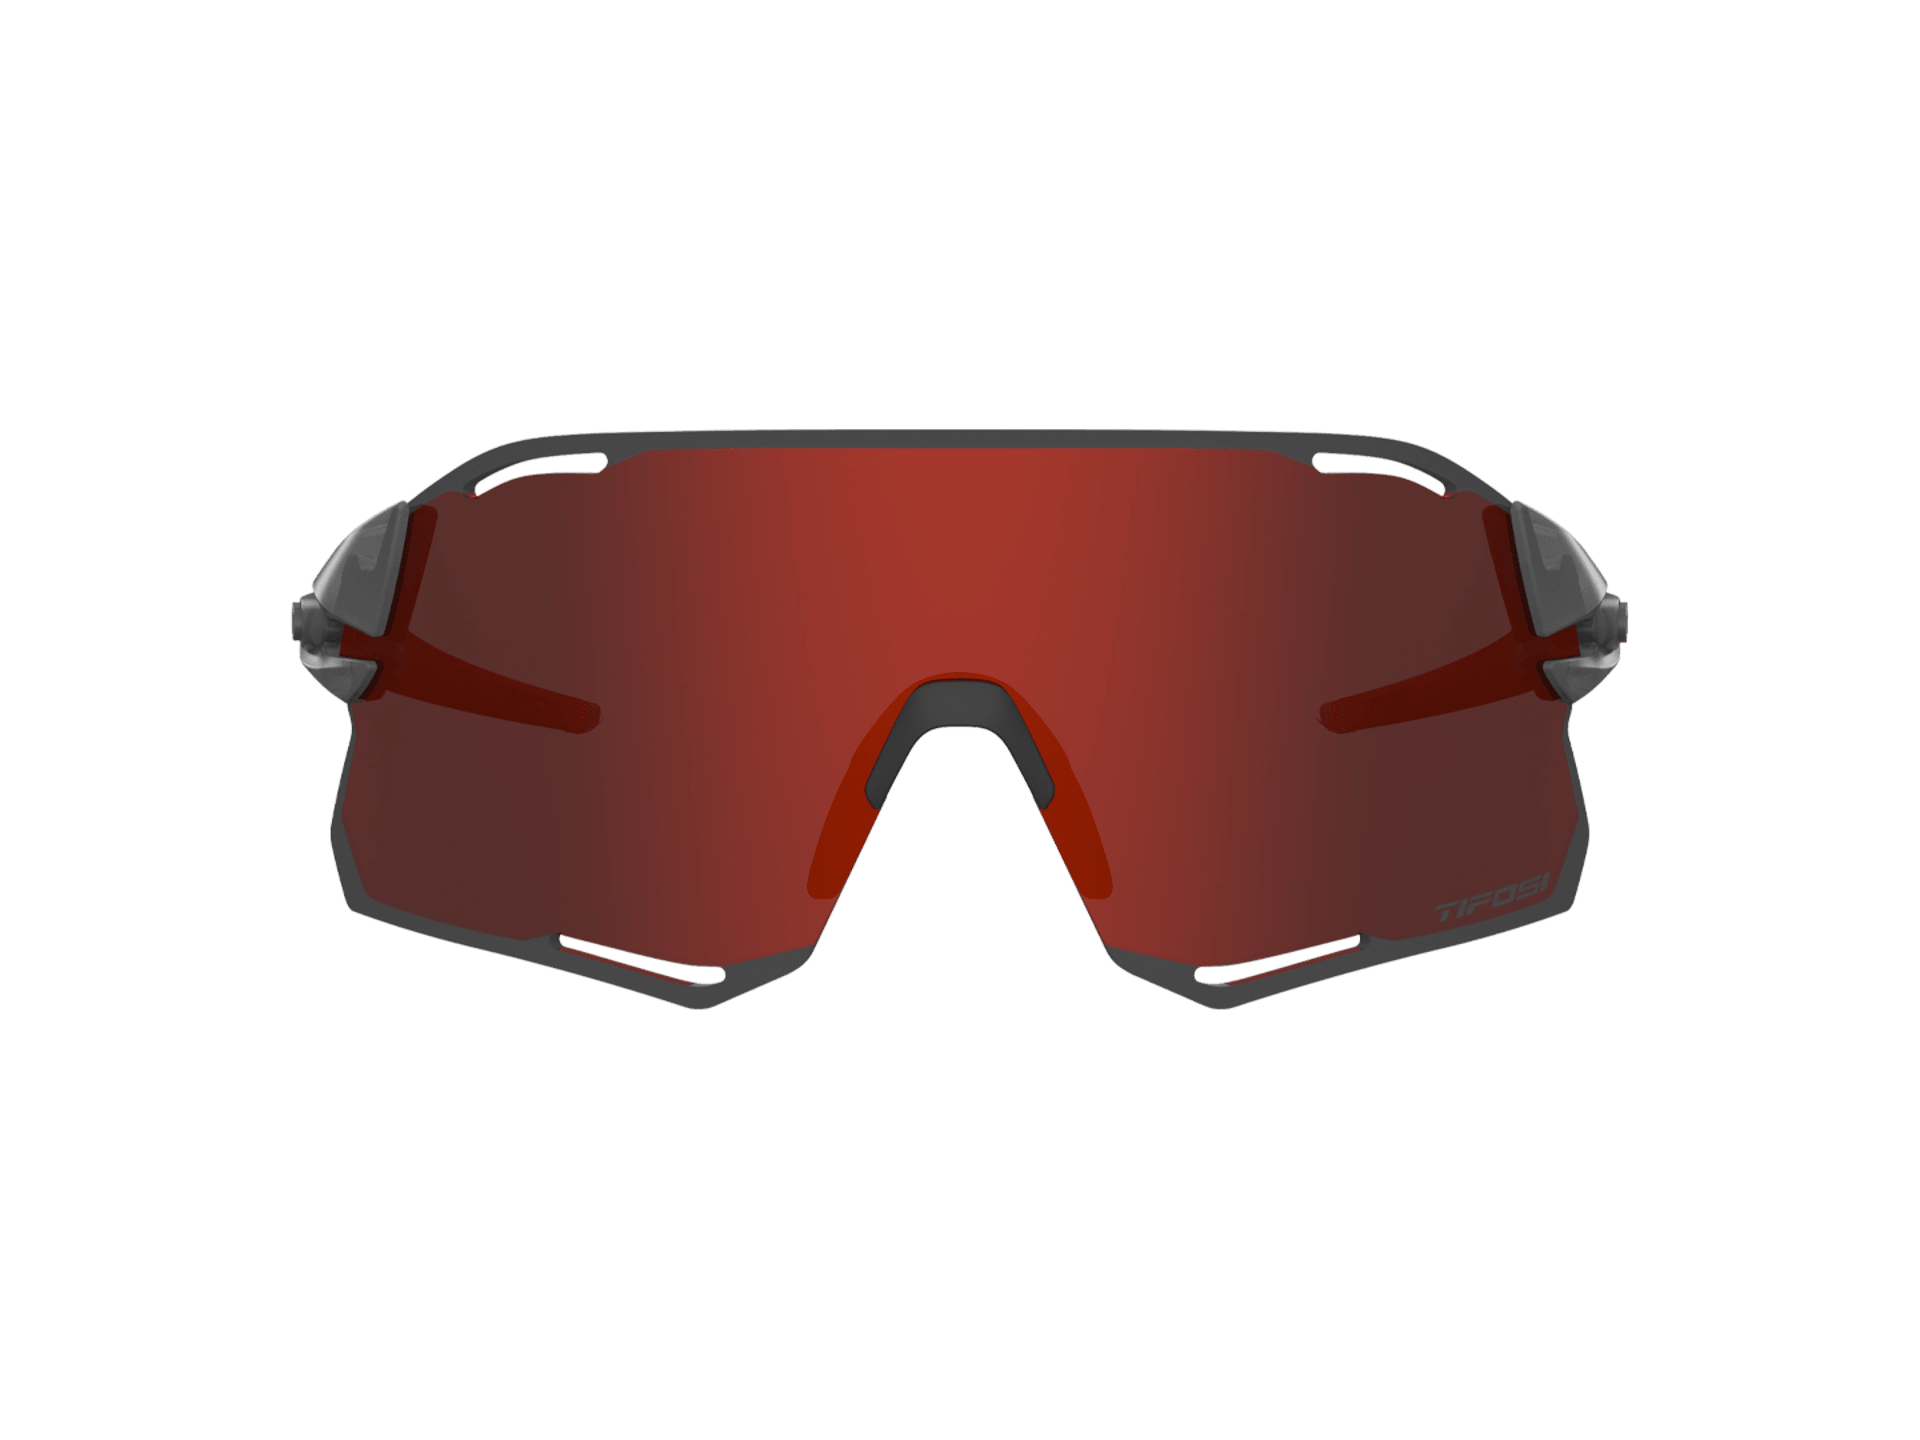 Tifosi Rail Race Interchange Sunglasses